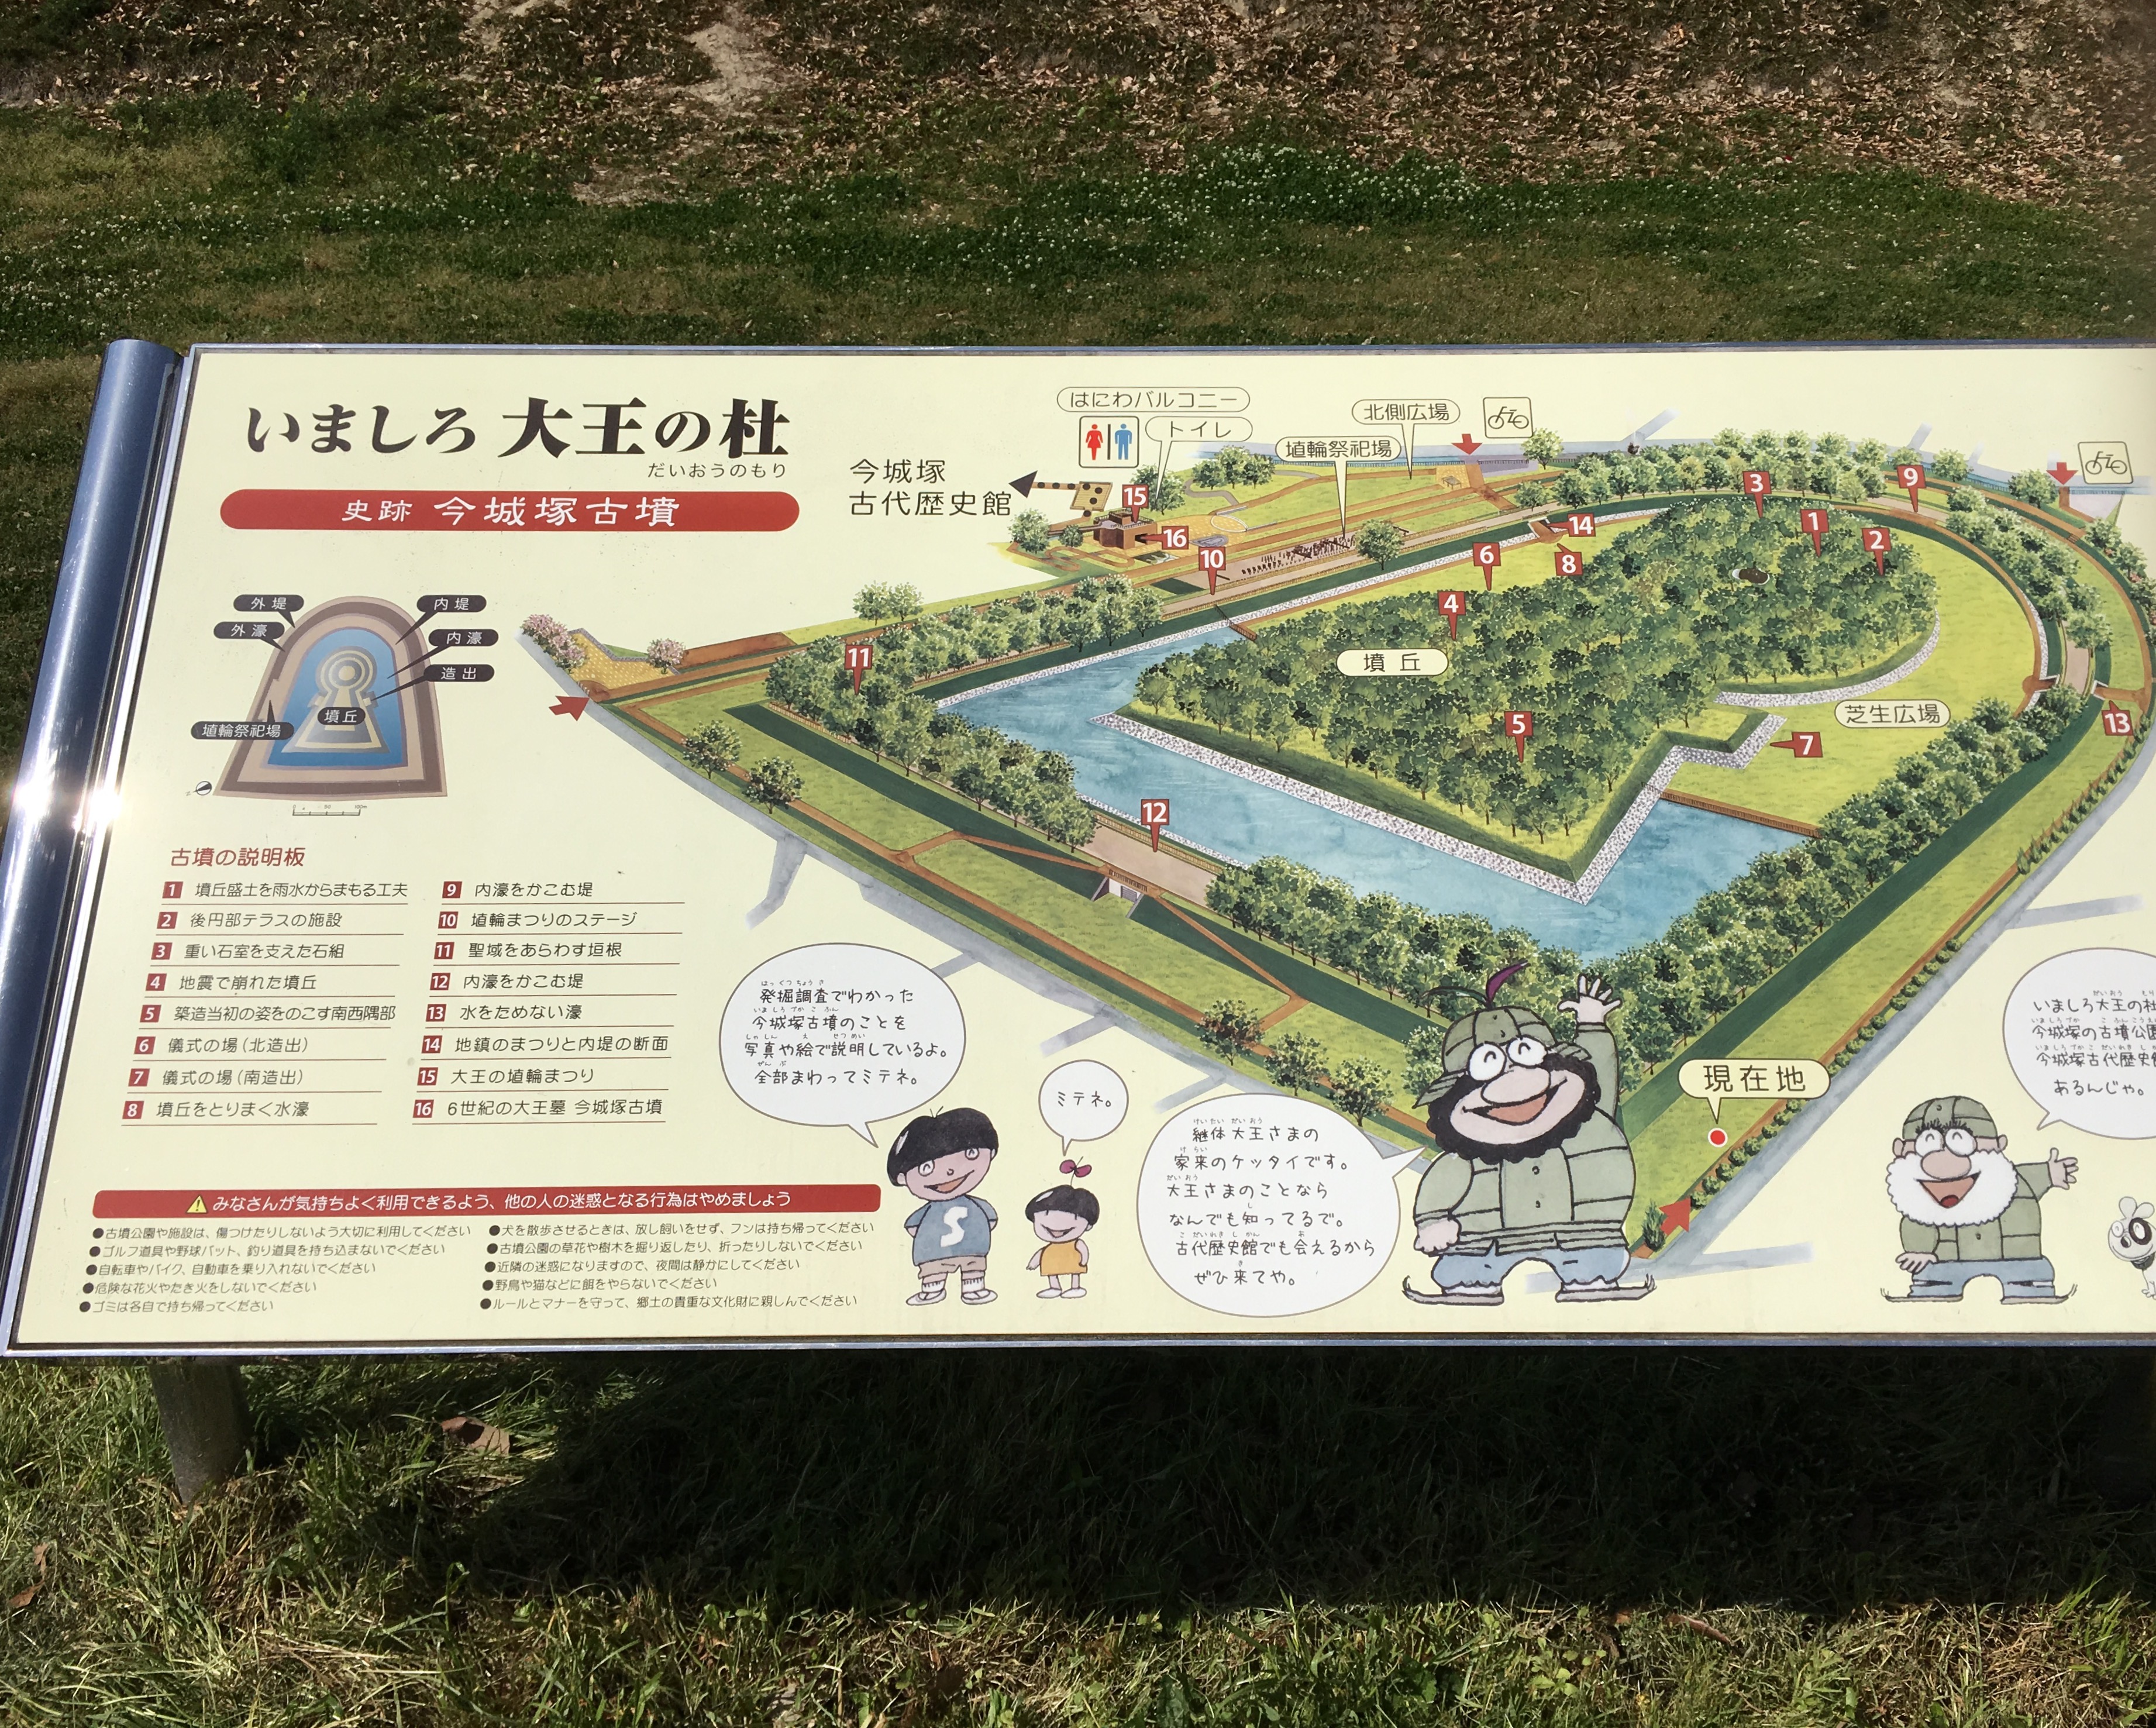 park map of key shaped kofun